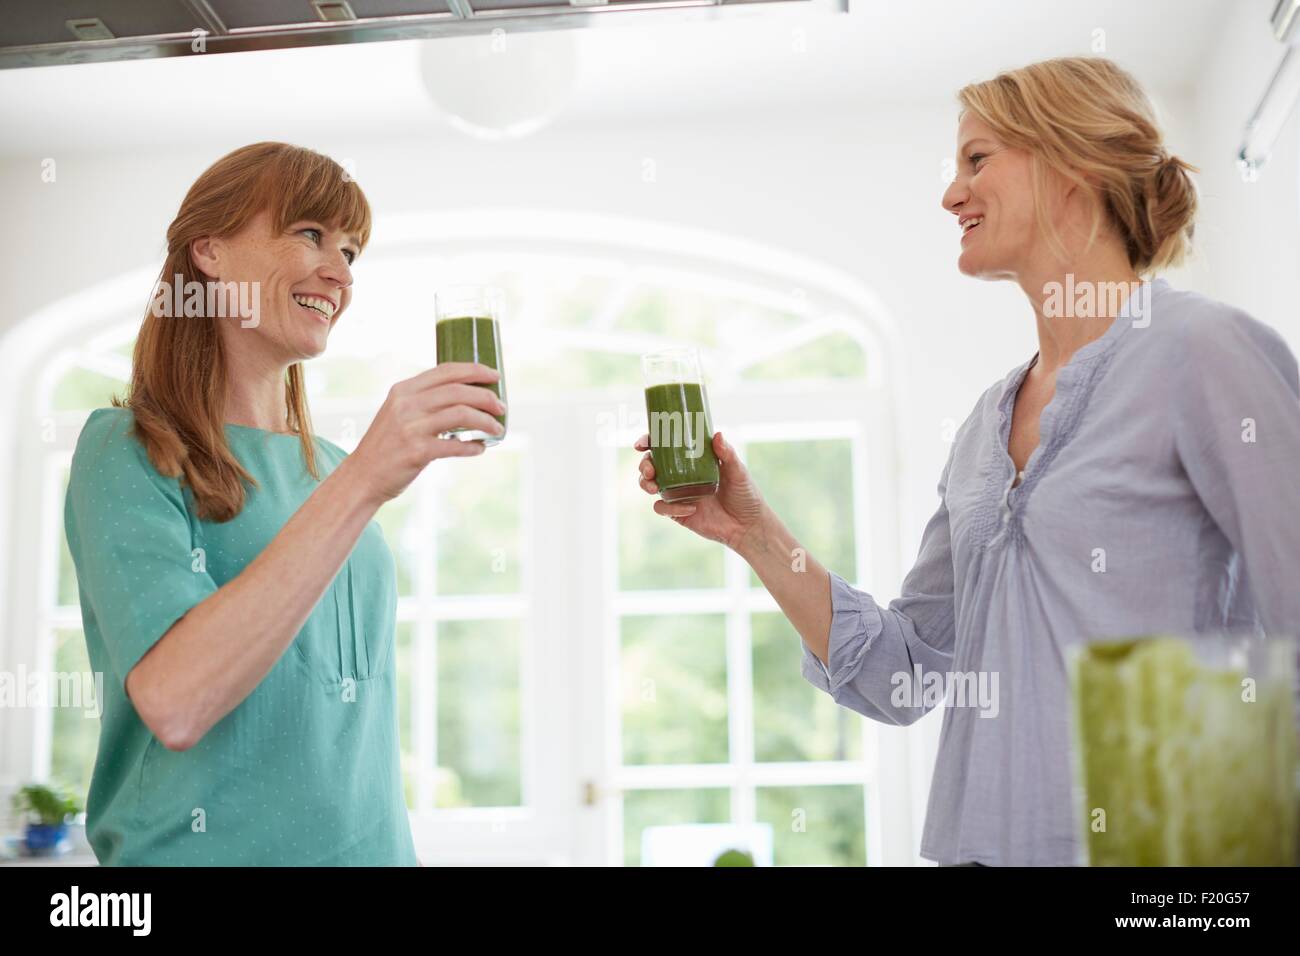 Women drinking green vegan smoothie in kitchen Stock Photo